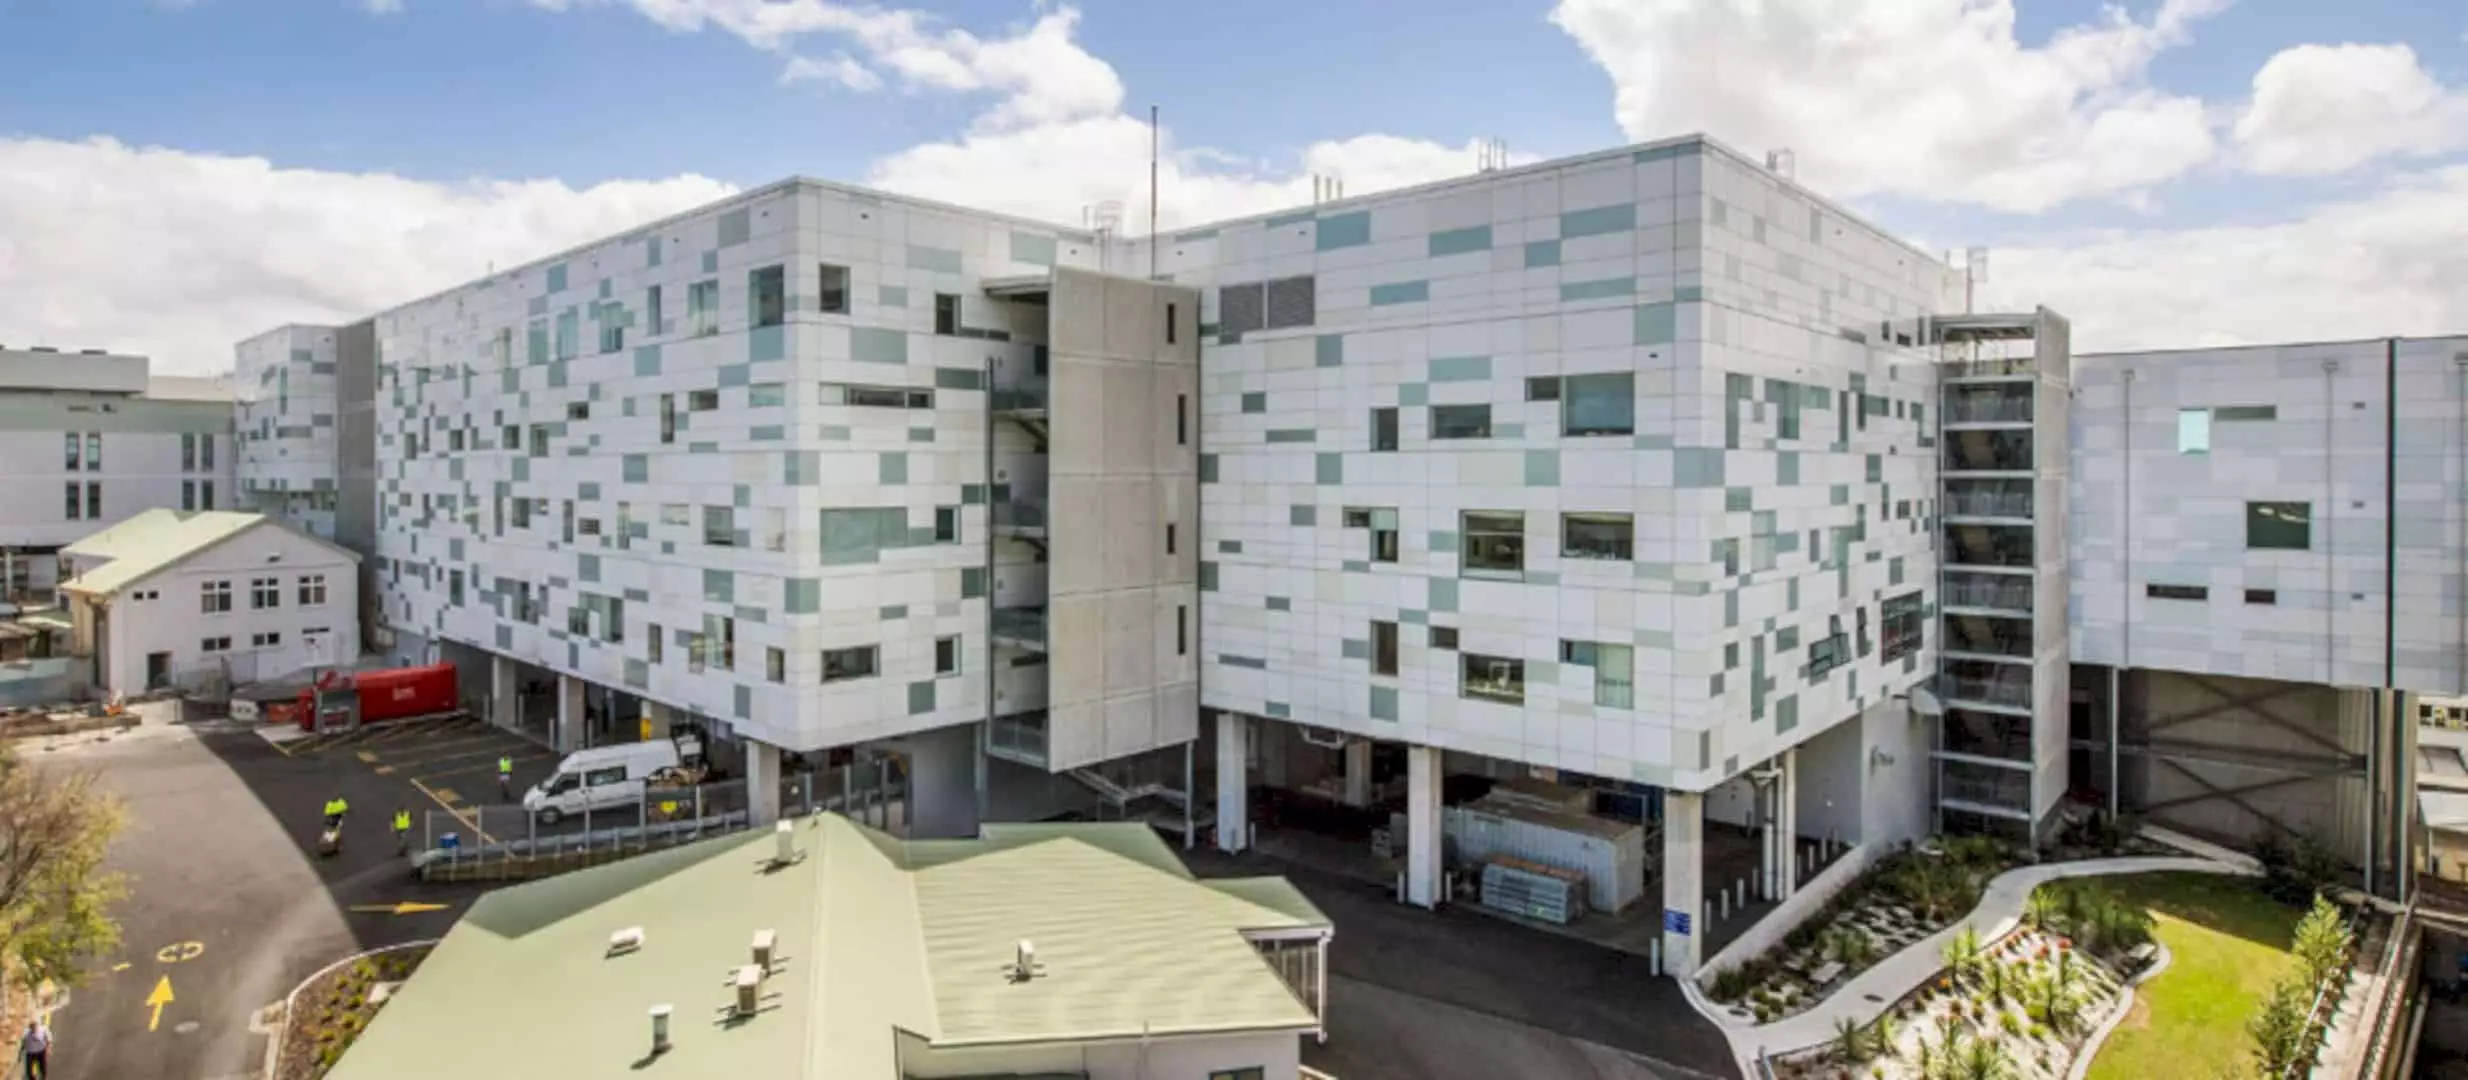 Waikato Hospital Meade Clinical Centre A Futuristc High Quality Healthcare Center In Hamilton 3